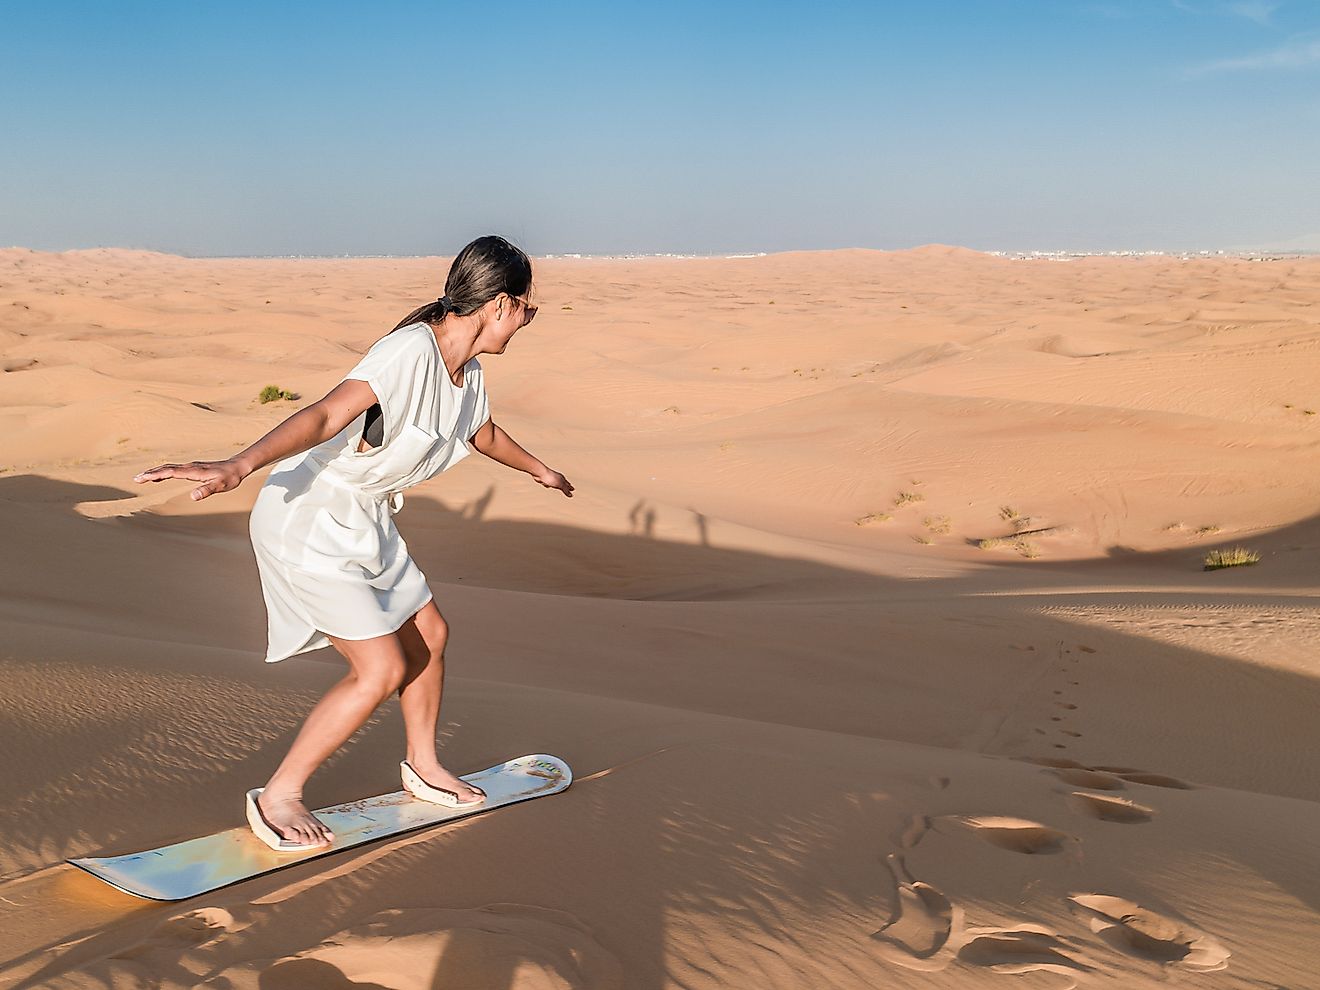  Young woman sand boarding in the desert over the sand dunes. Image credit: Fokke Baarssen/Shutterstock.com